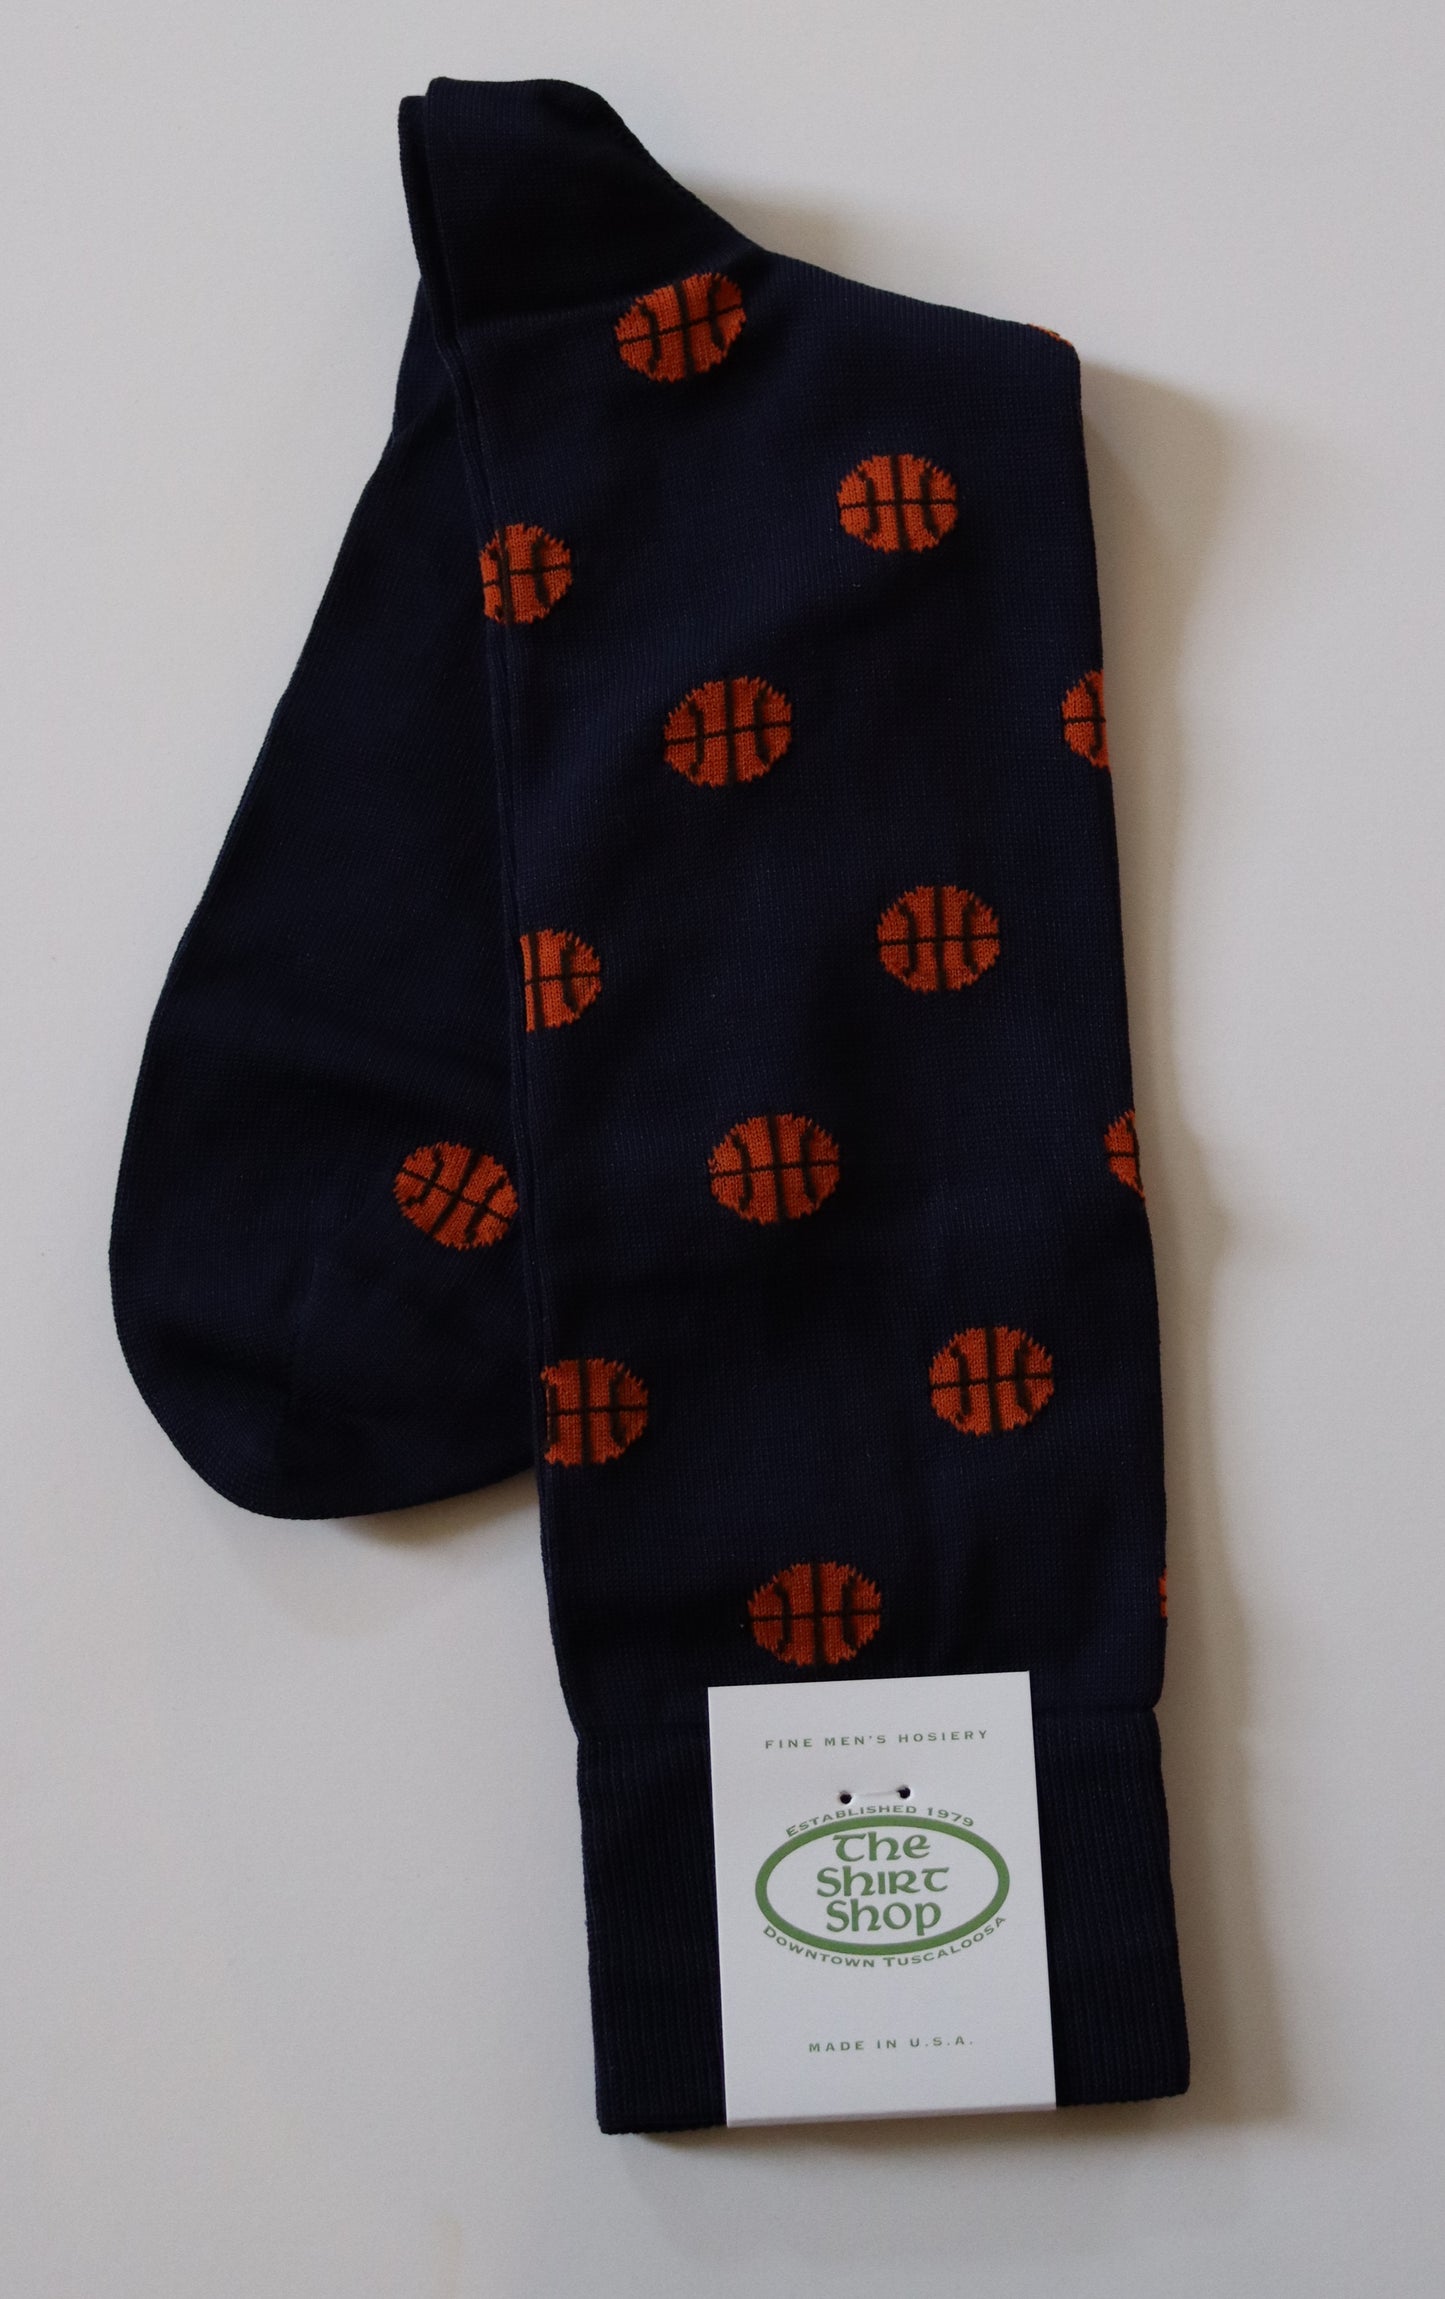 The Shirt Shop Dress Socks - Basketball